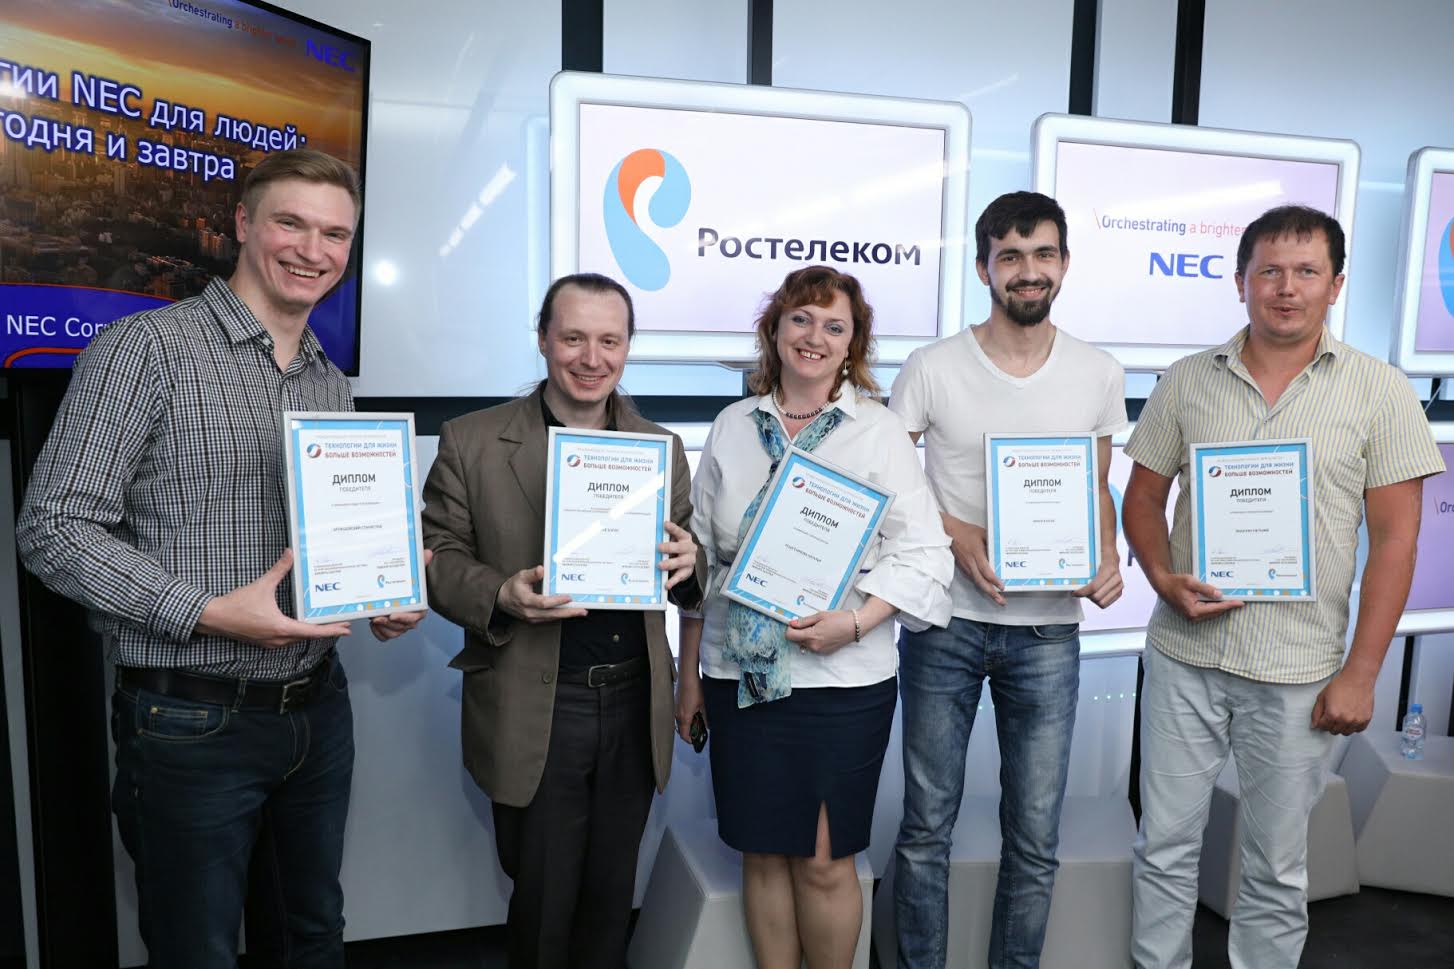 Журналист из Татарстана победил в международном конкурсе «Ростелекома»